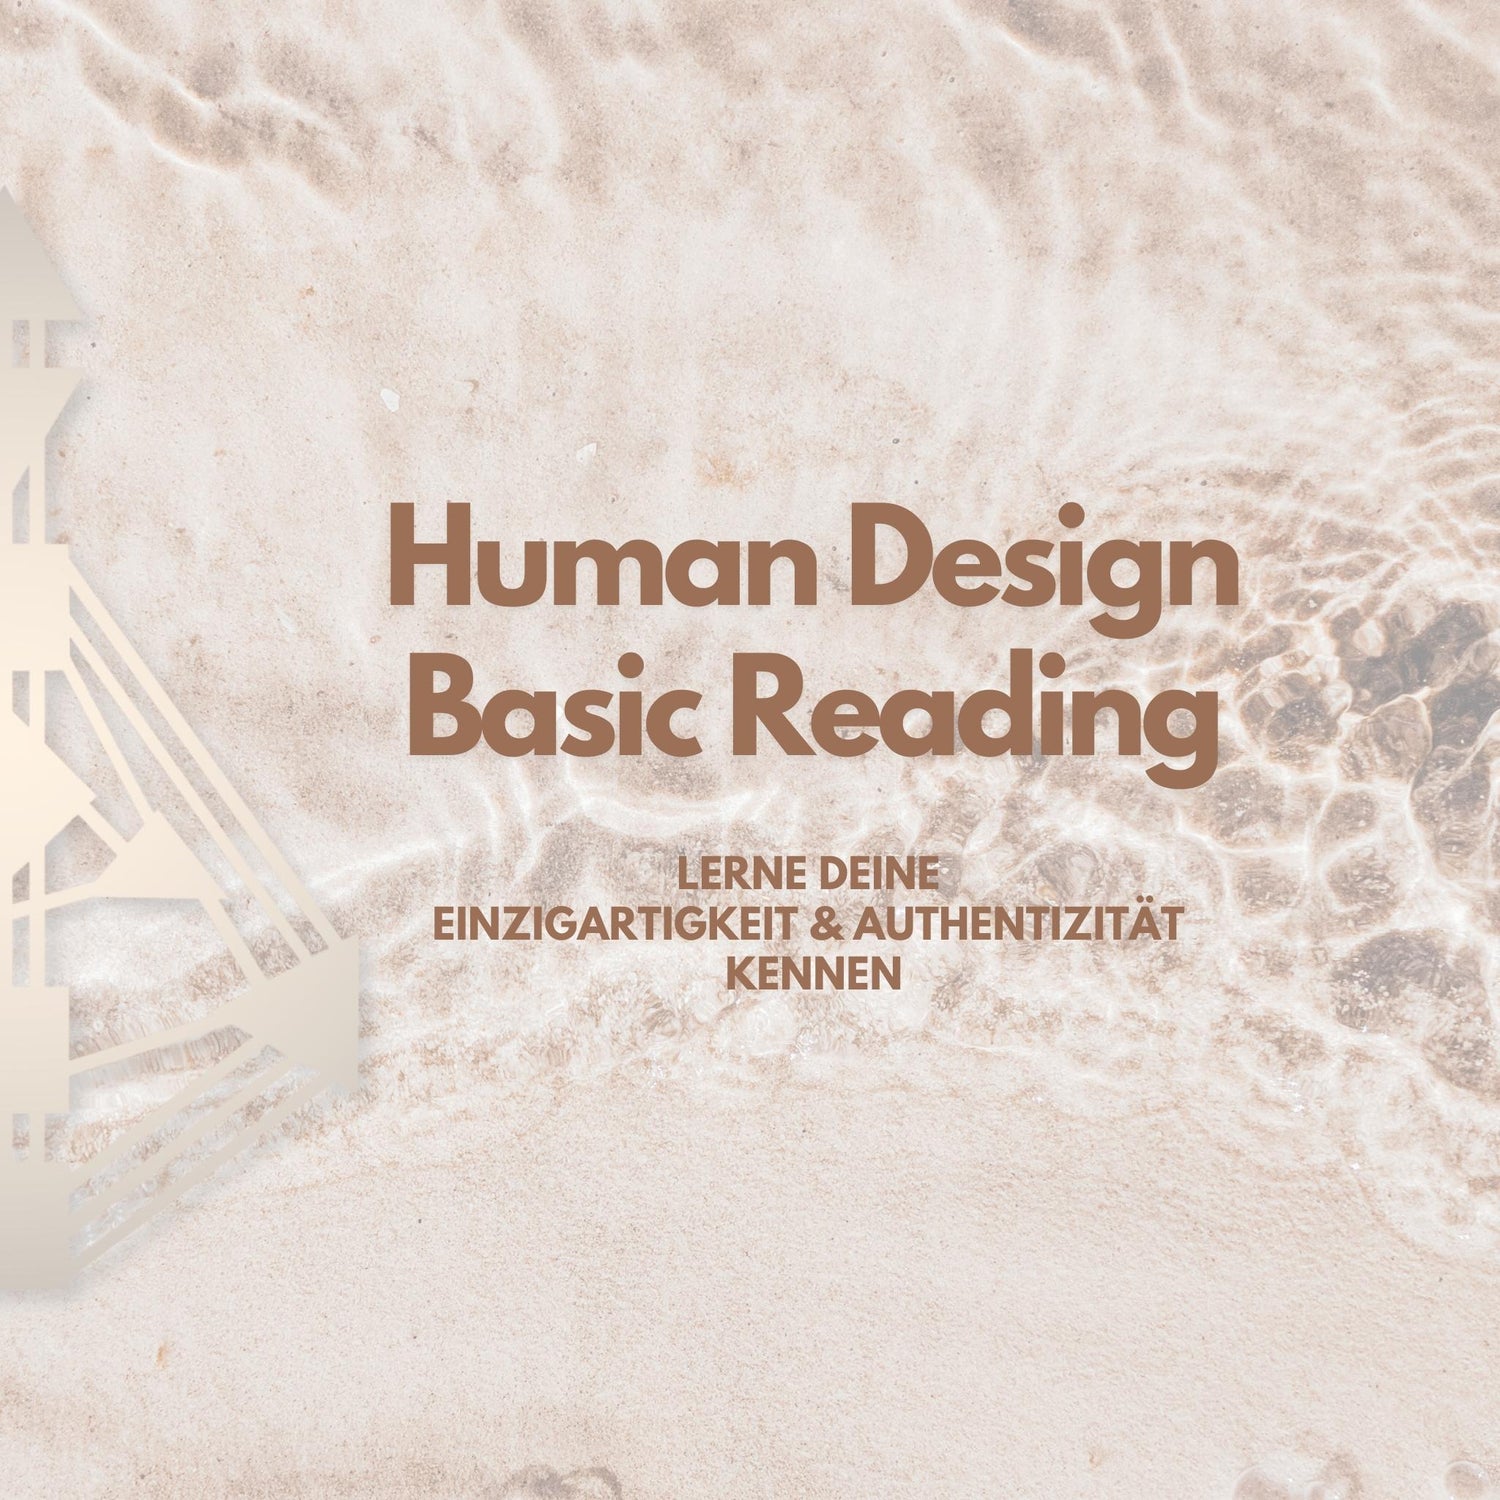 Human Design Basic Reading kaufen in Human Design Shop